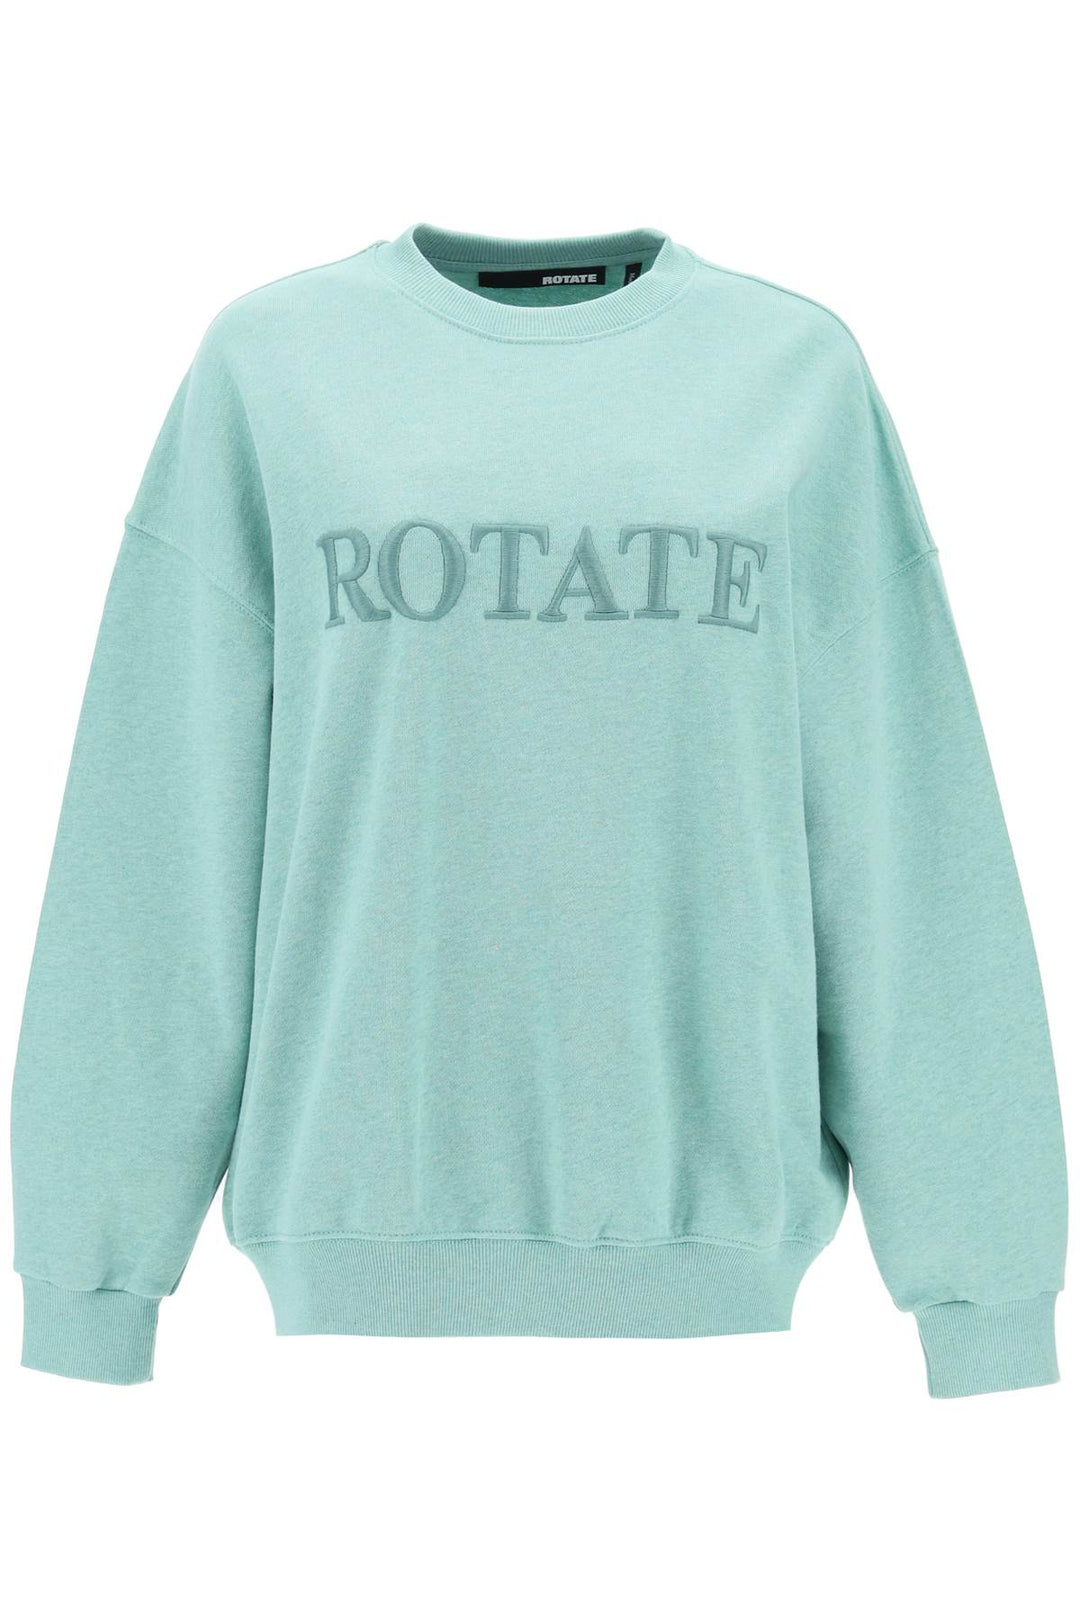 Rotate Organic Cotton Crewneck Sweatshirt   Green